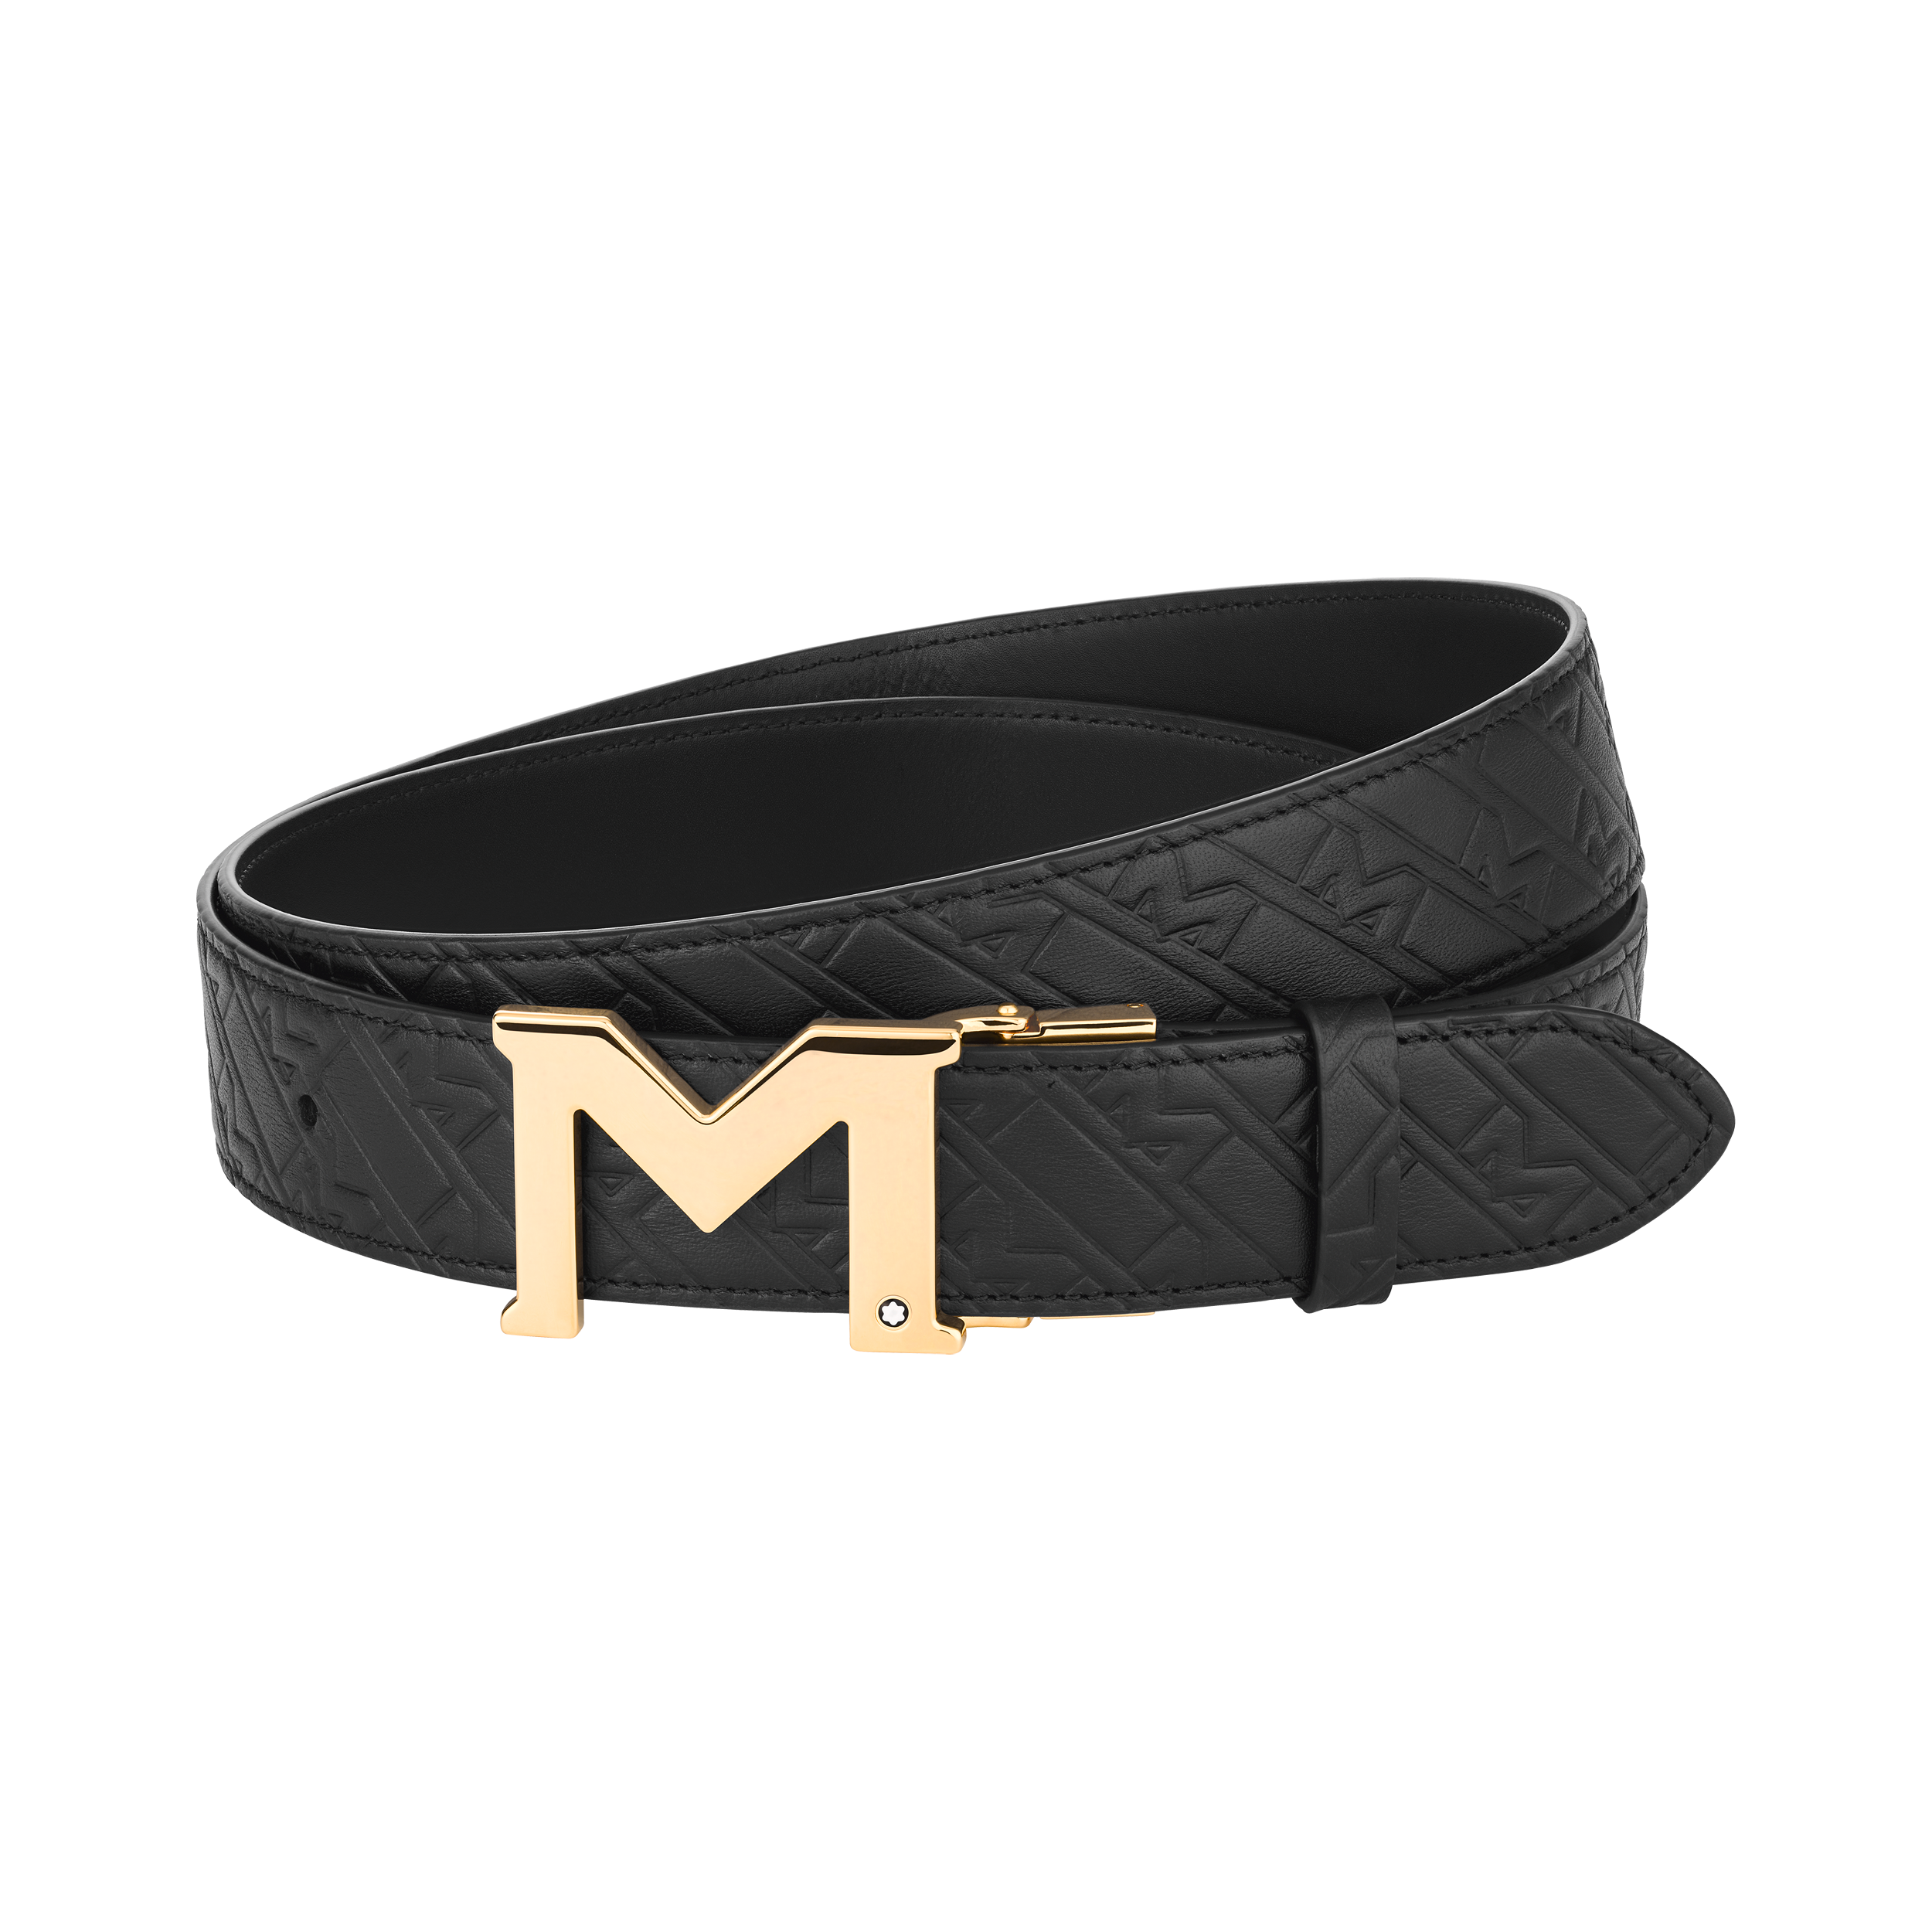 M buckle black 35 mm reversible leather belt